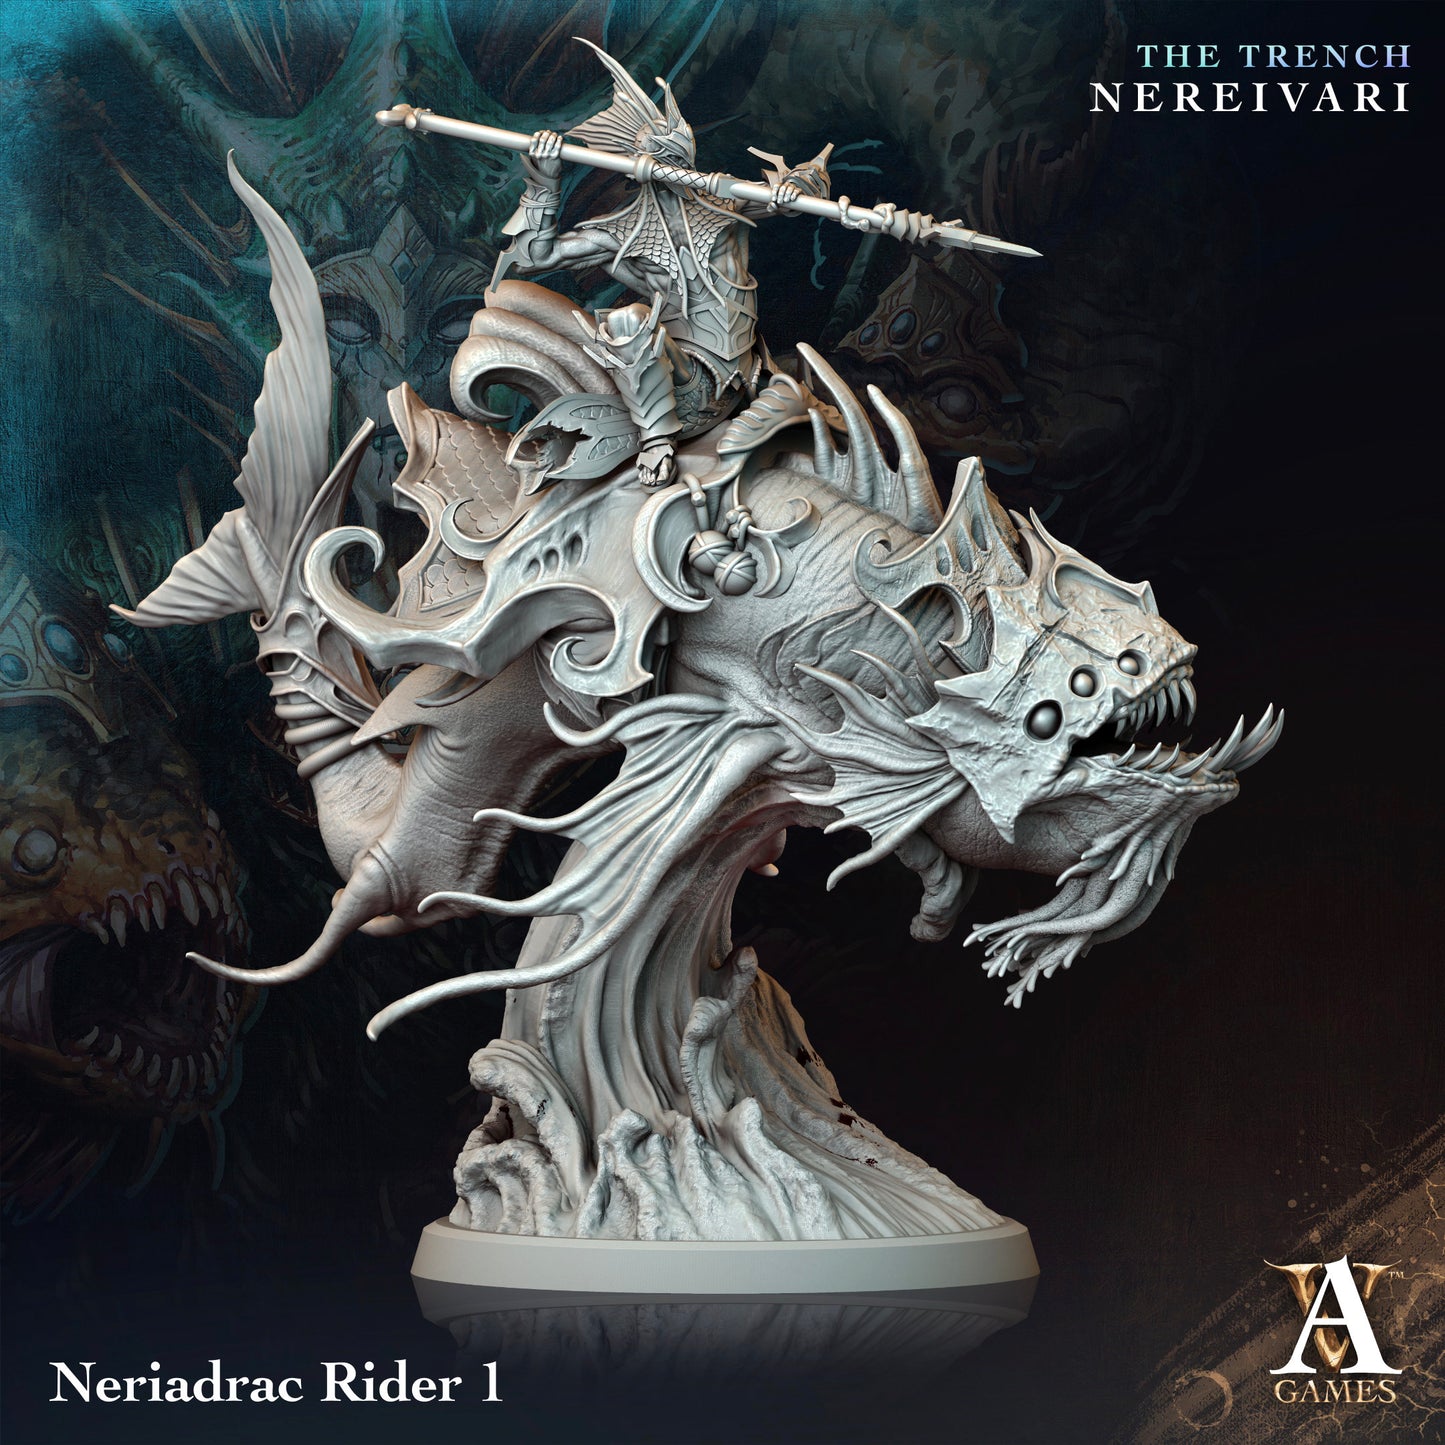 Neriadrac Rider -The Trench - Nereivari (copia)